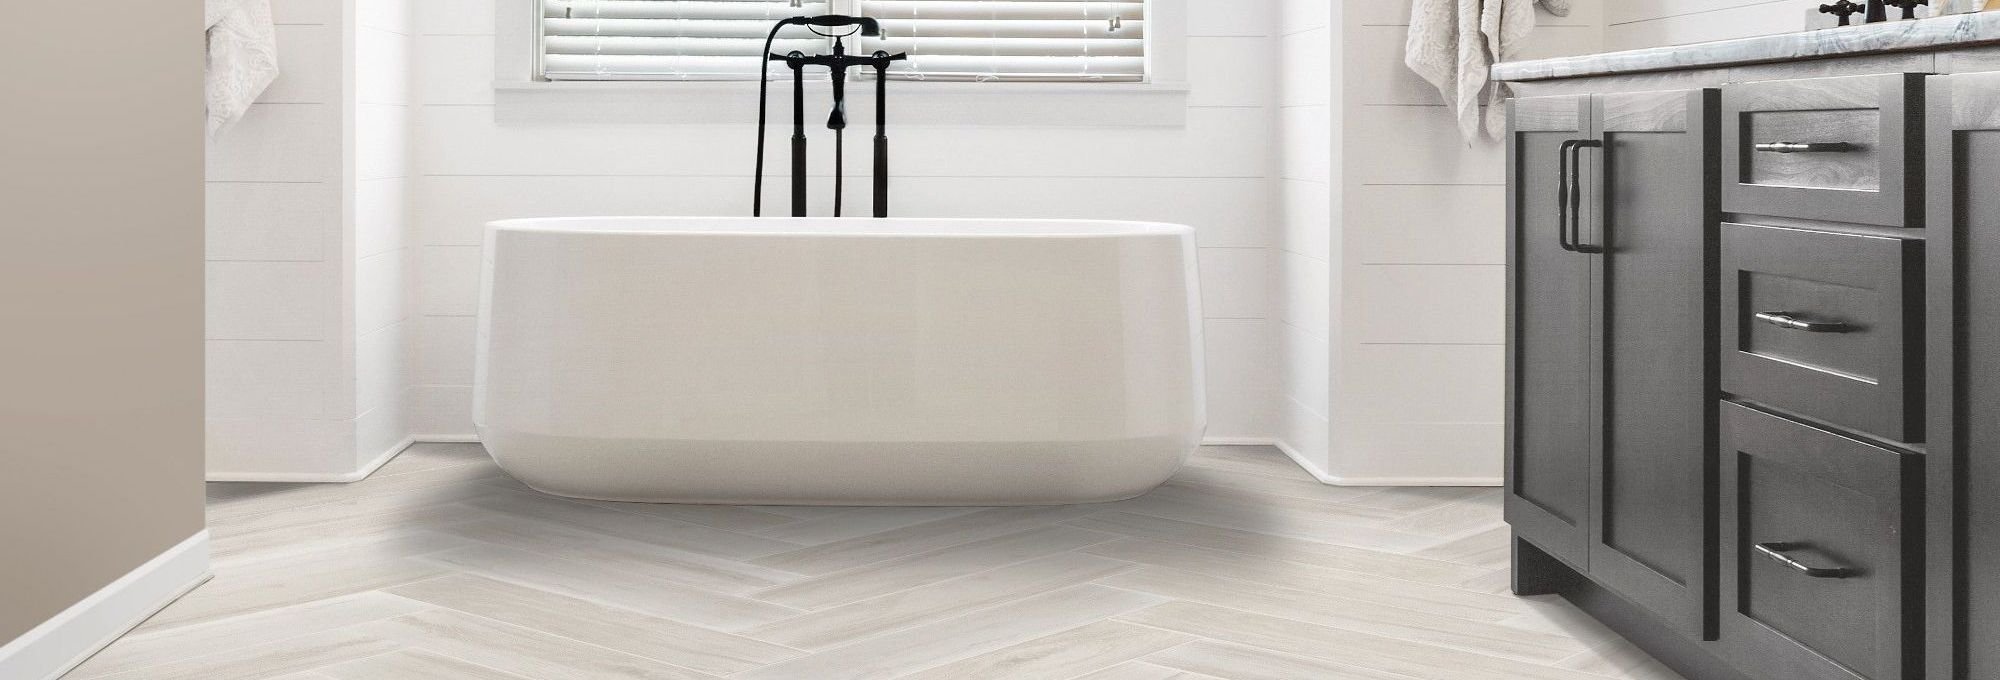 Tiled bathroom with a white bathtub - Triangle Flooring Center in Carrboro, North Carolina